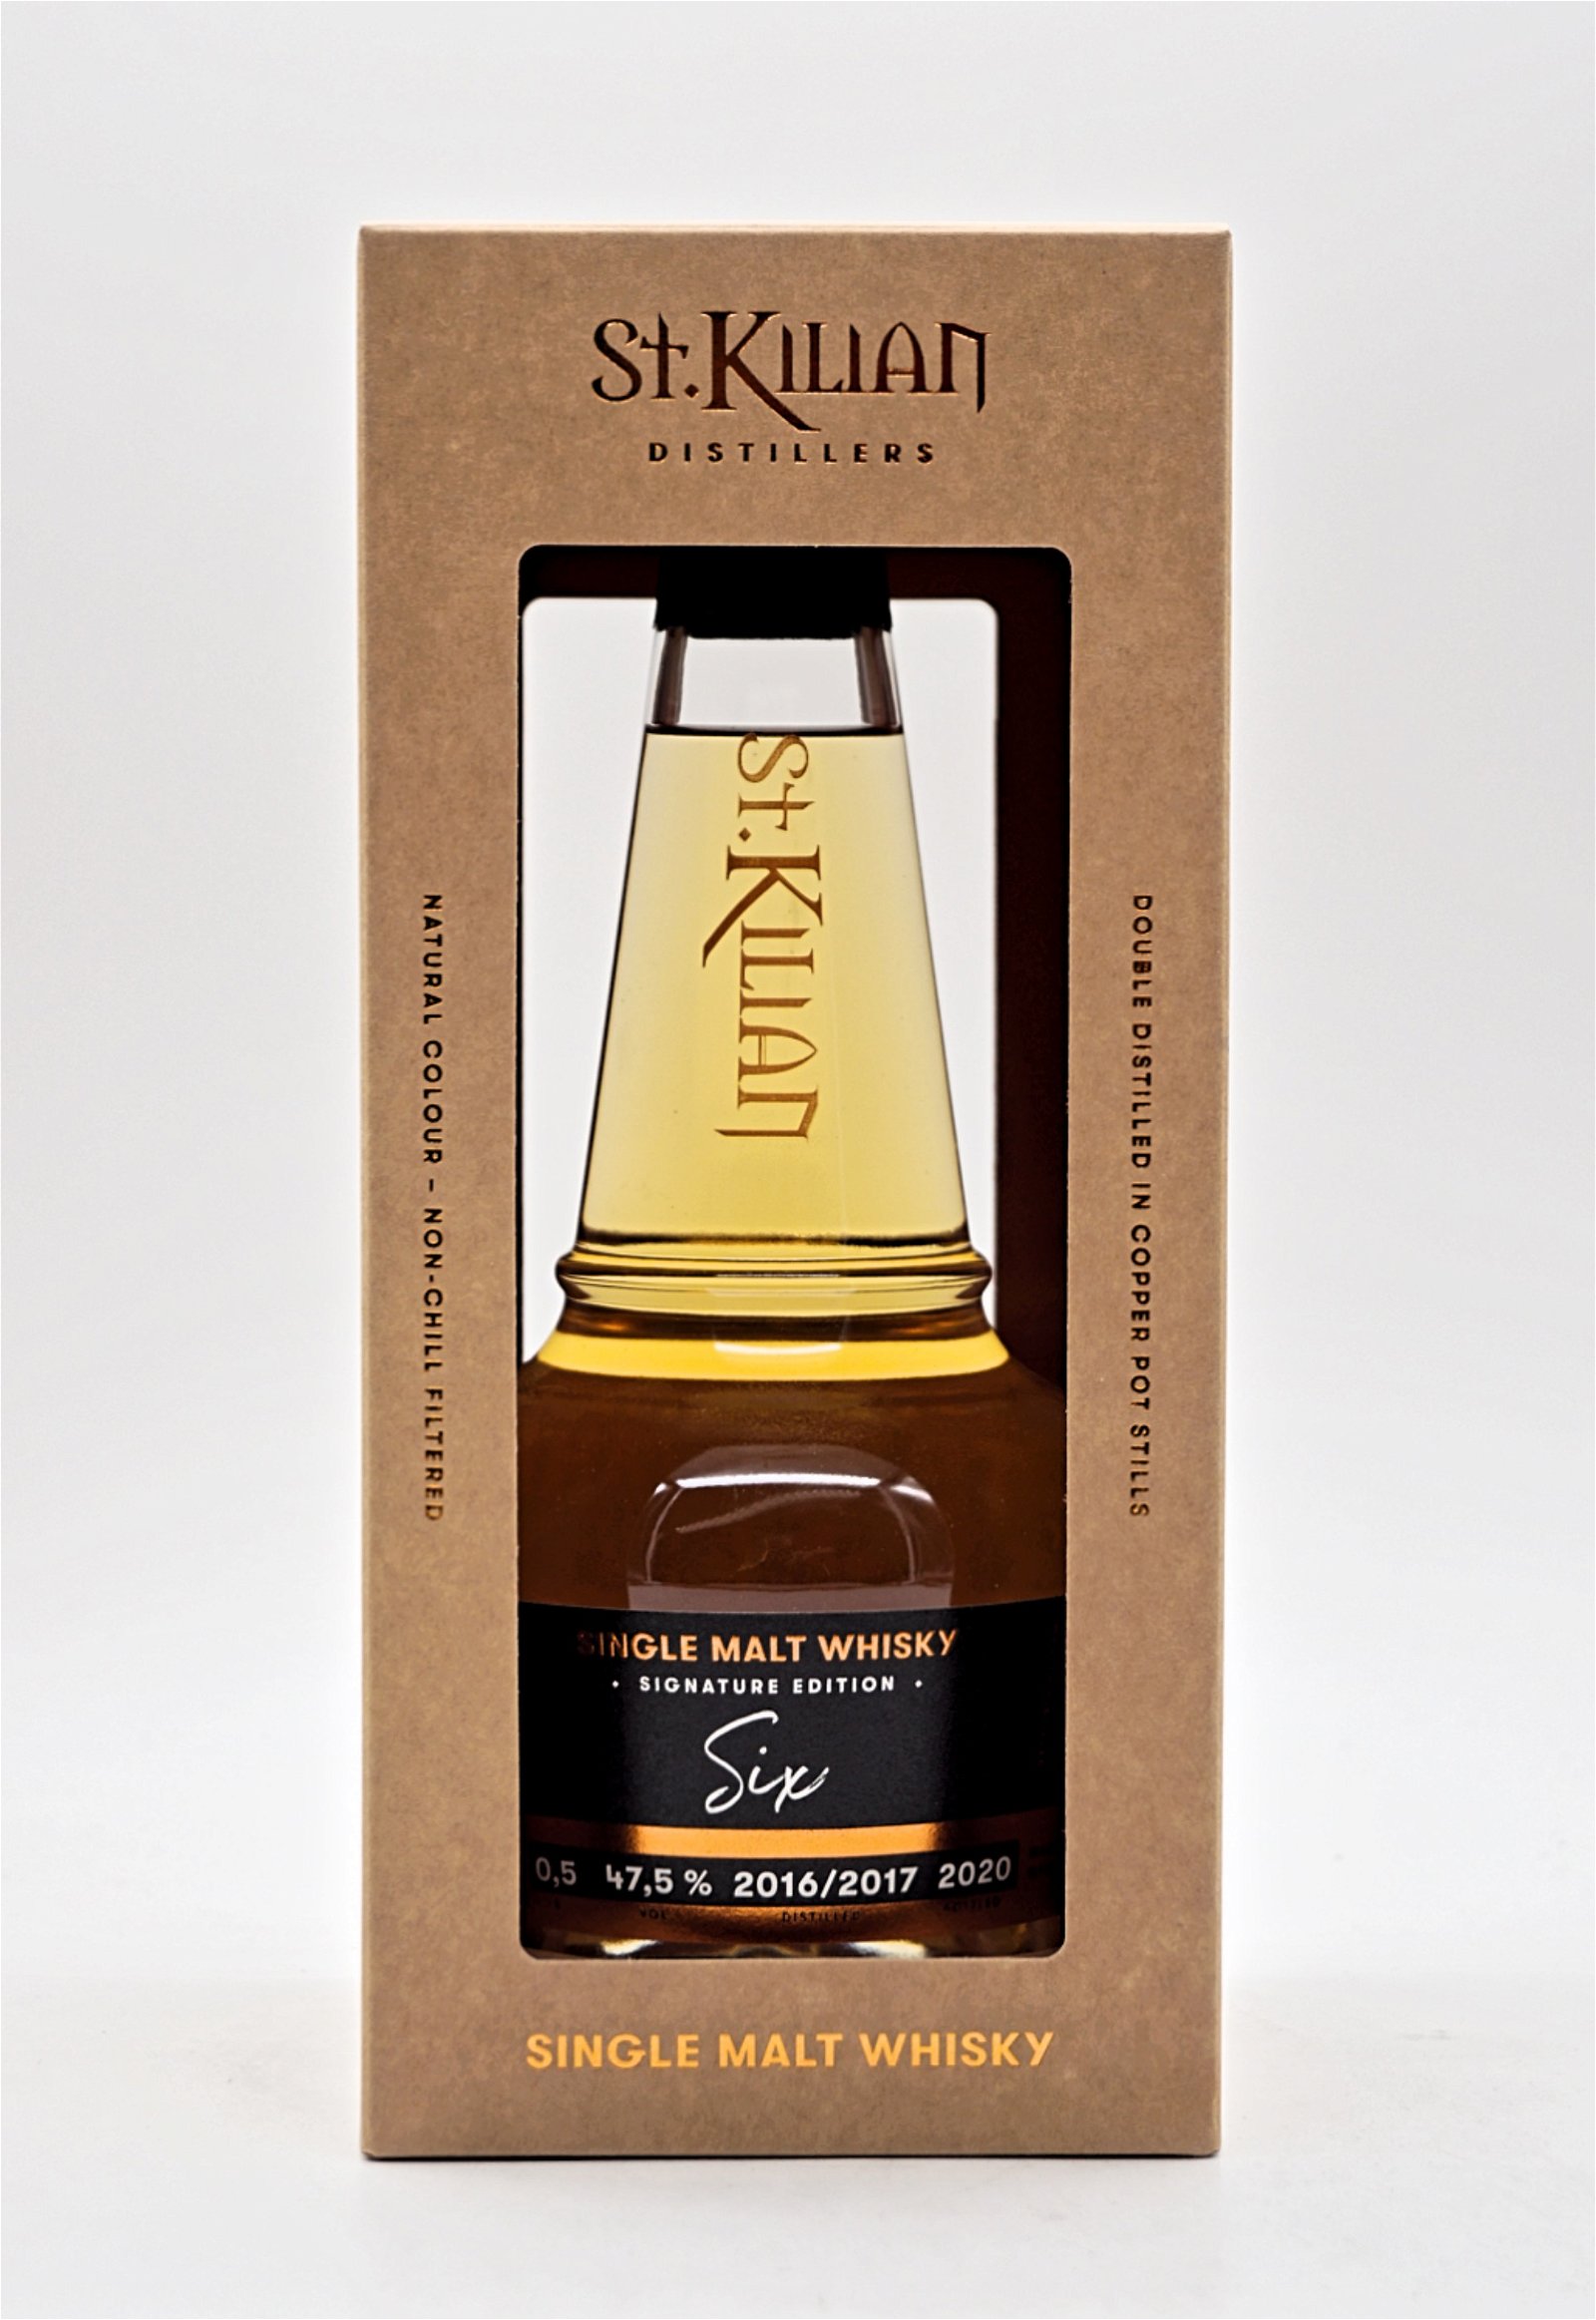 St. Kilian Distillers Signature Edition Six Single Malt Whisky